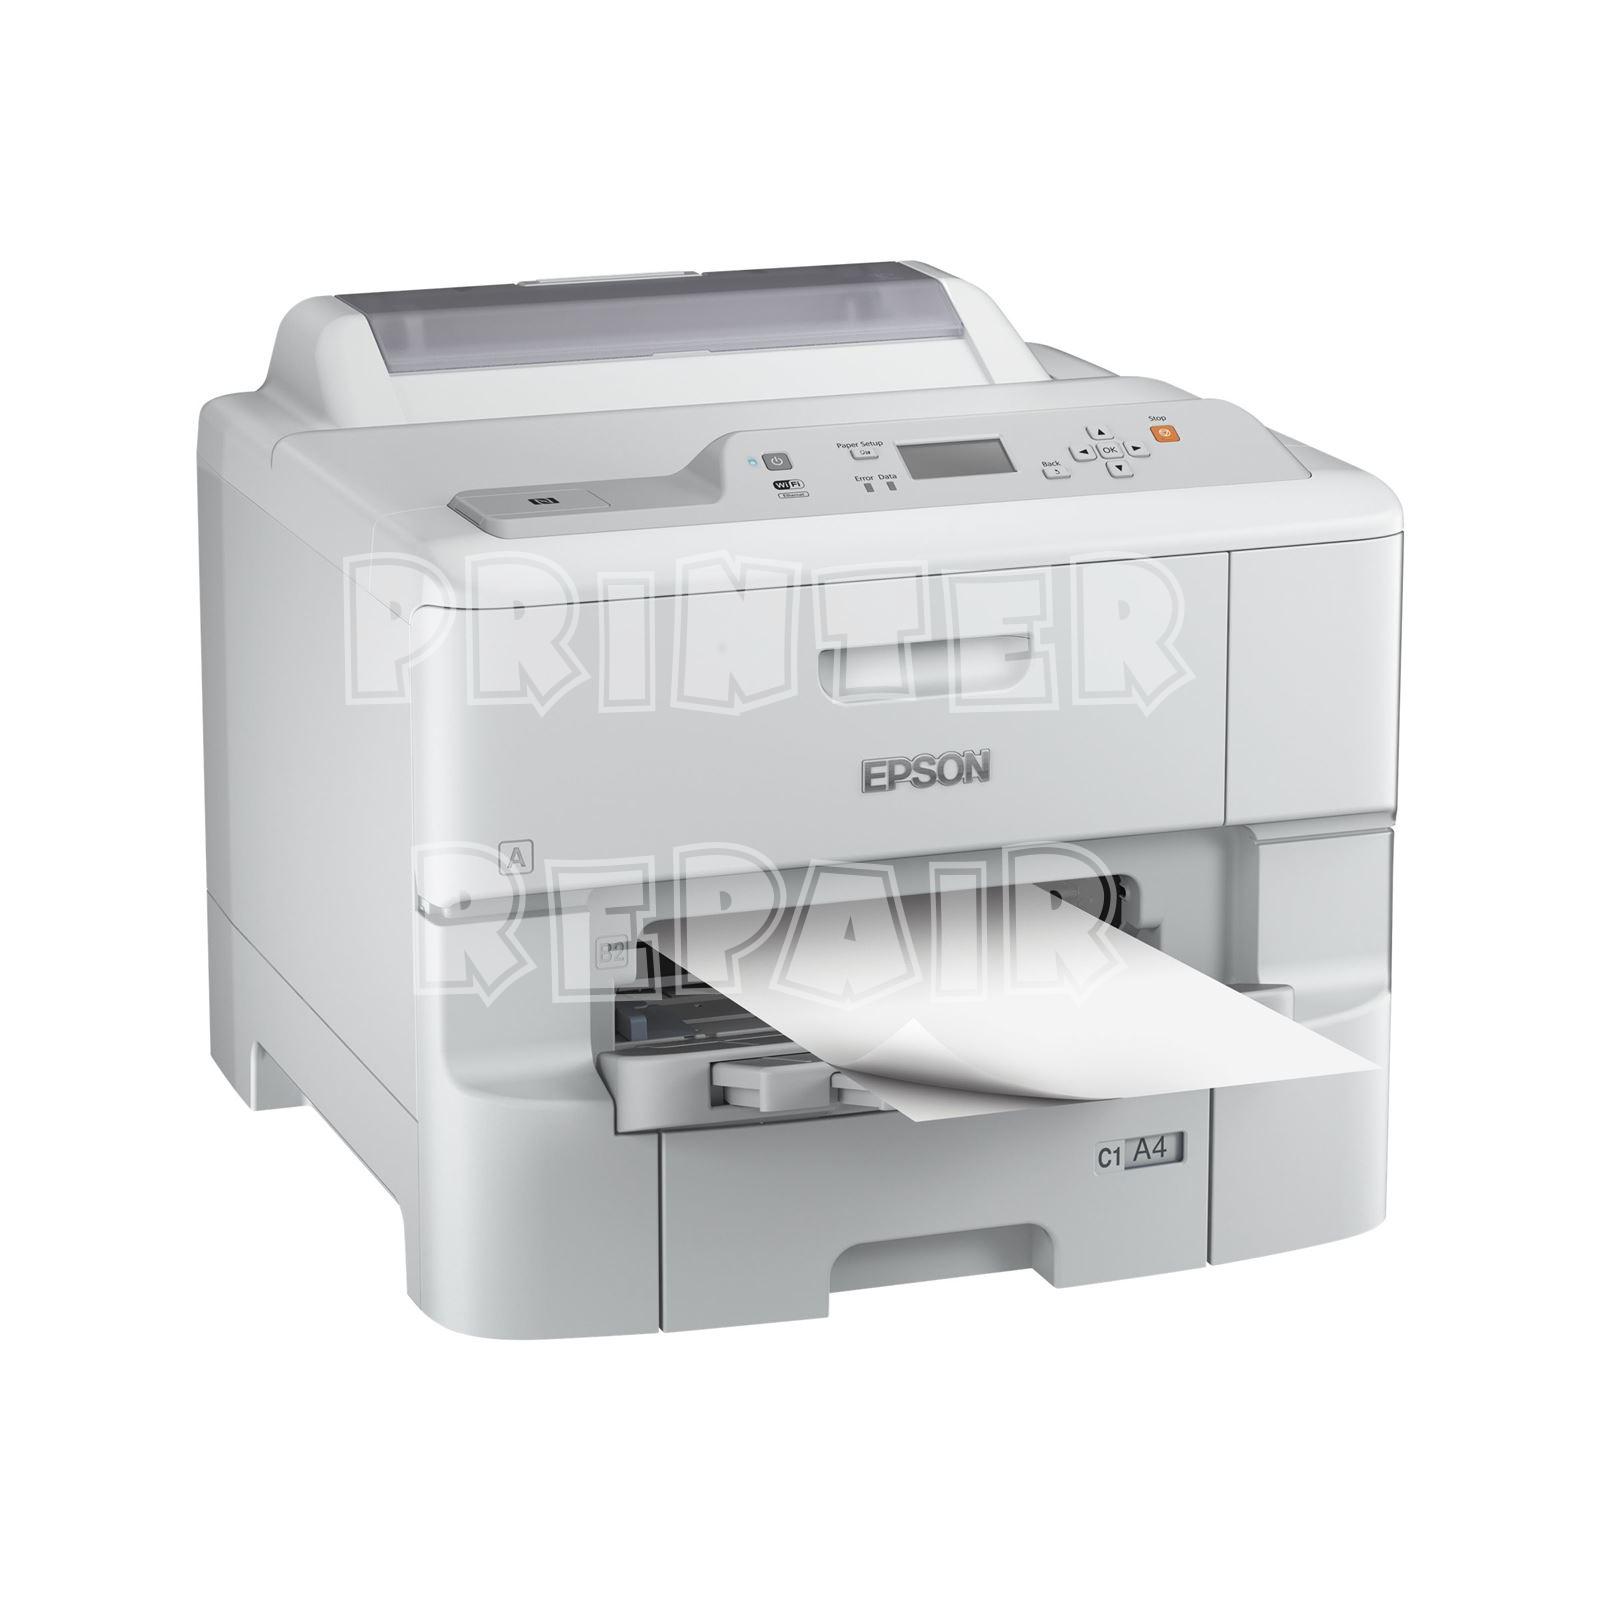 Epson Workforce Pro WF 6090DW A4 Colour Printer